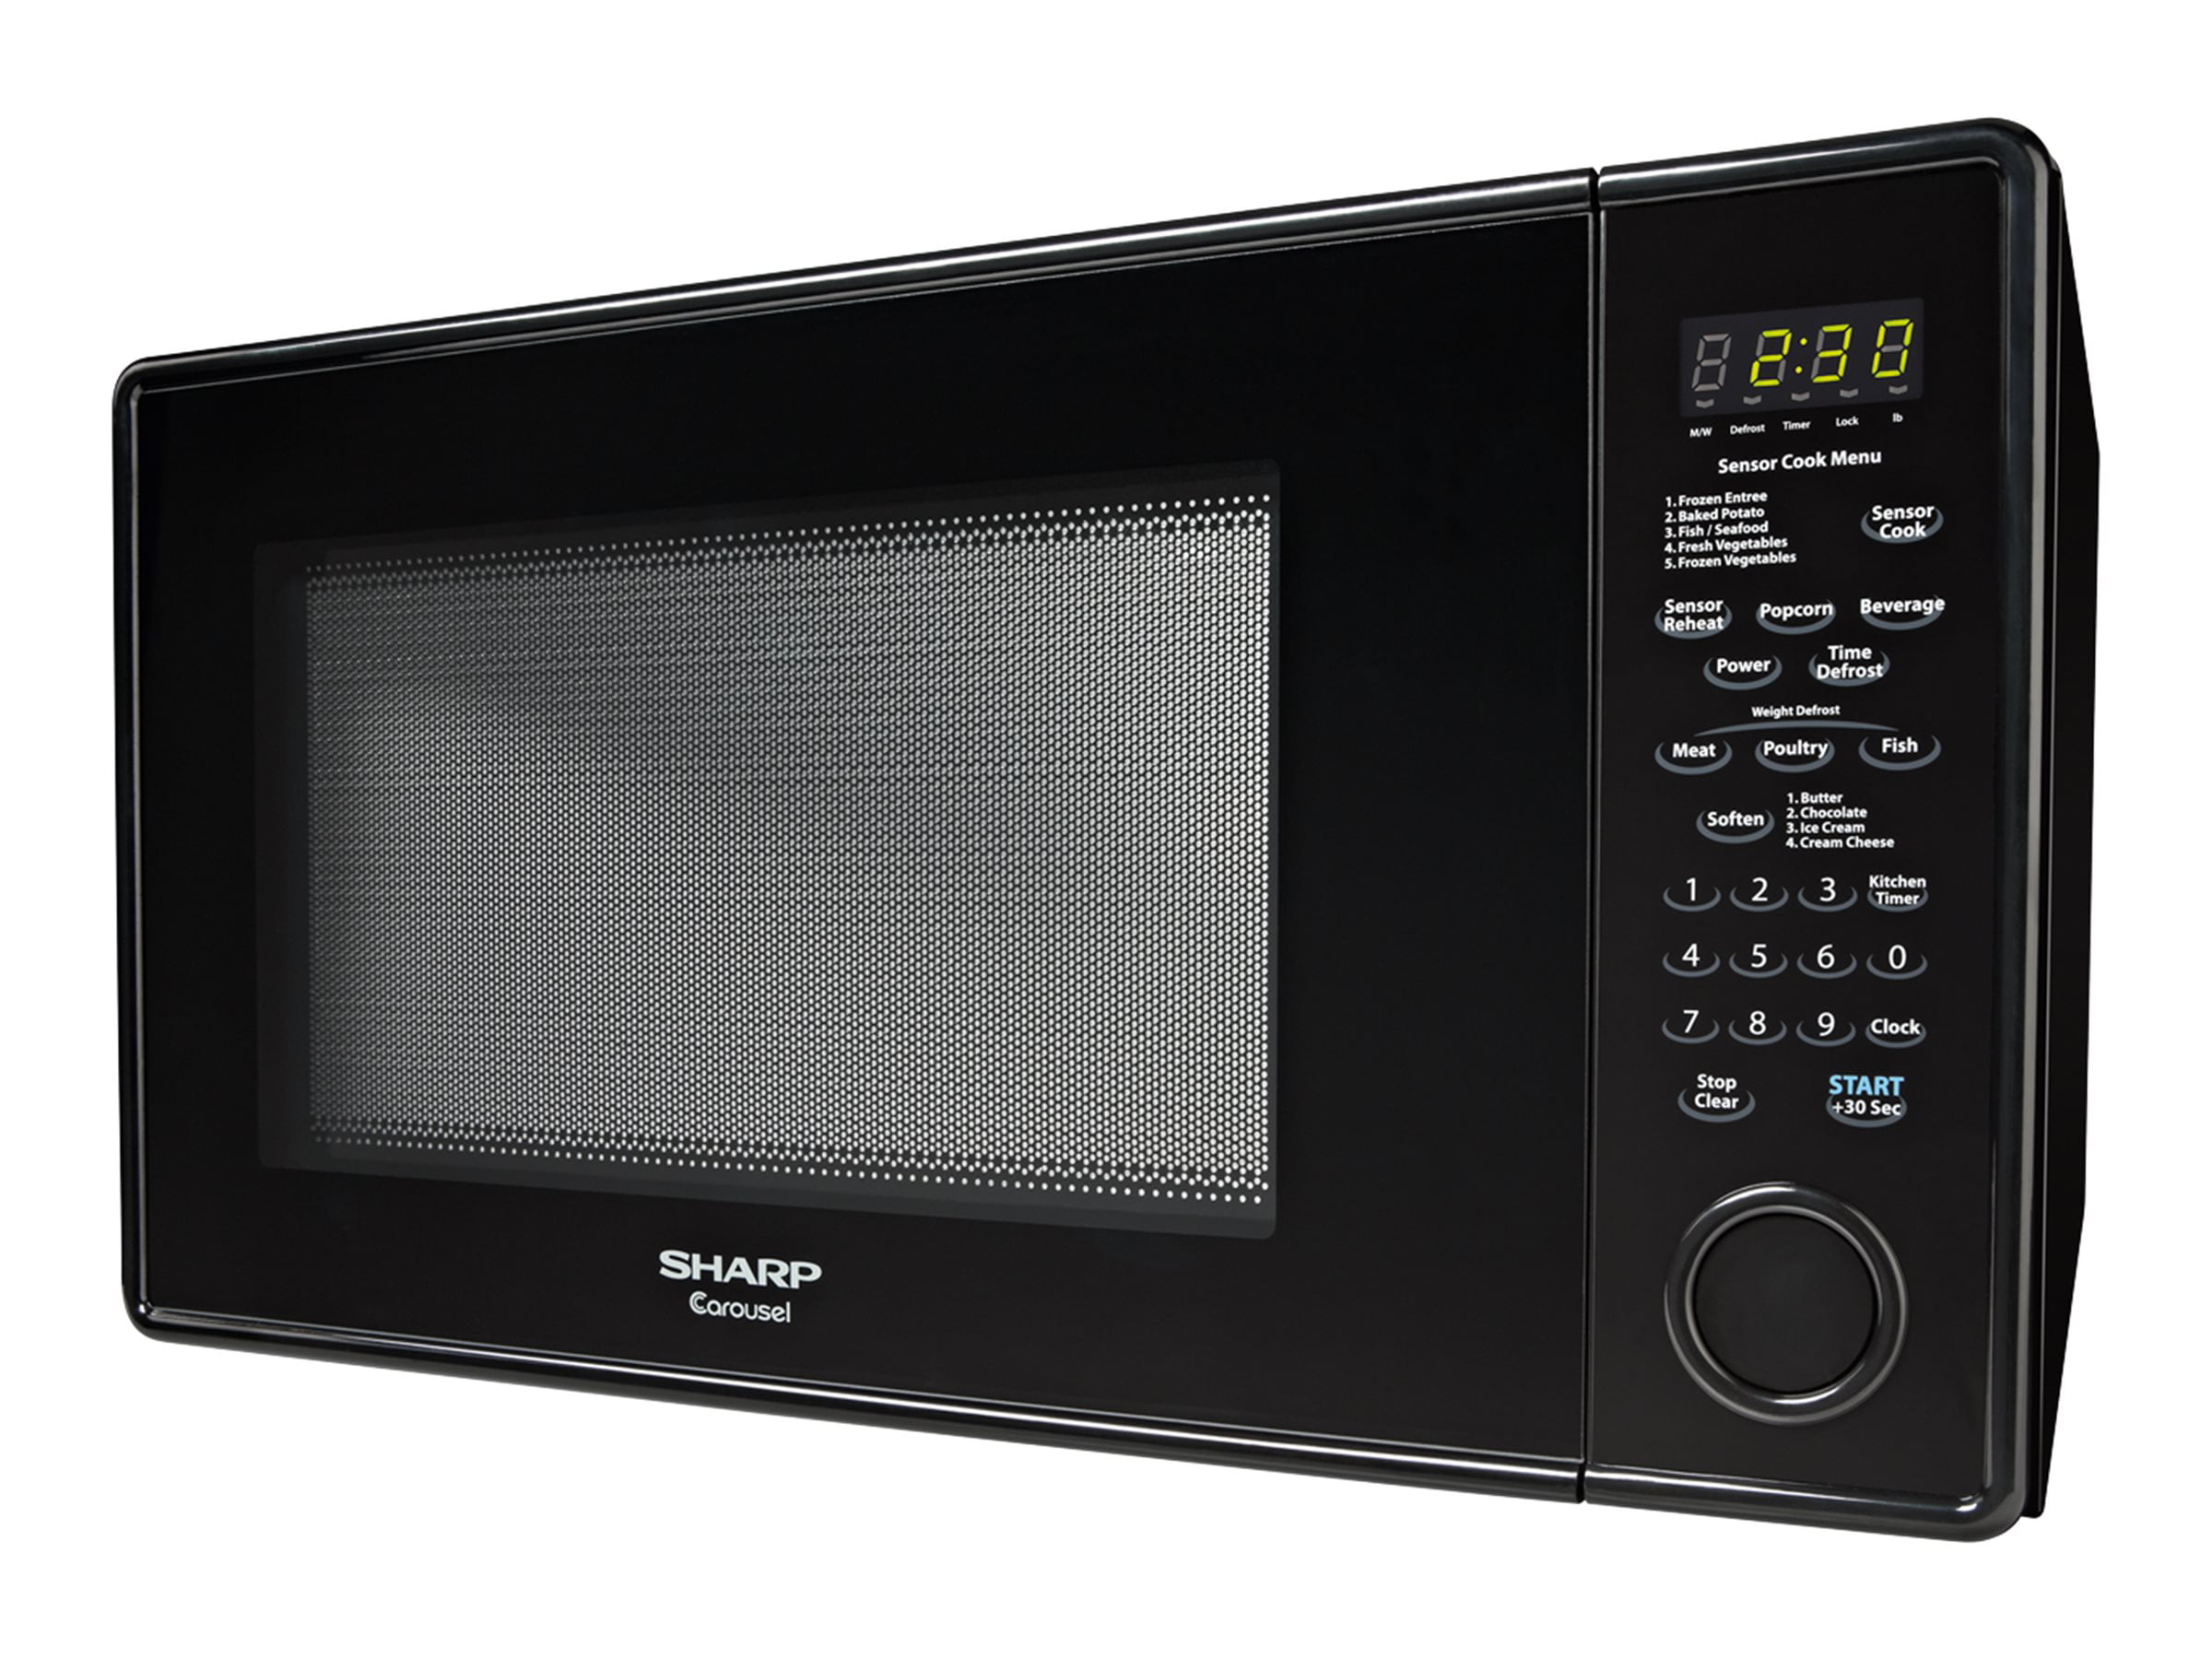 sharp-r559yk-carousel-countertop-microwave-oven-1-8-cu-ft-1100w-black